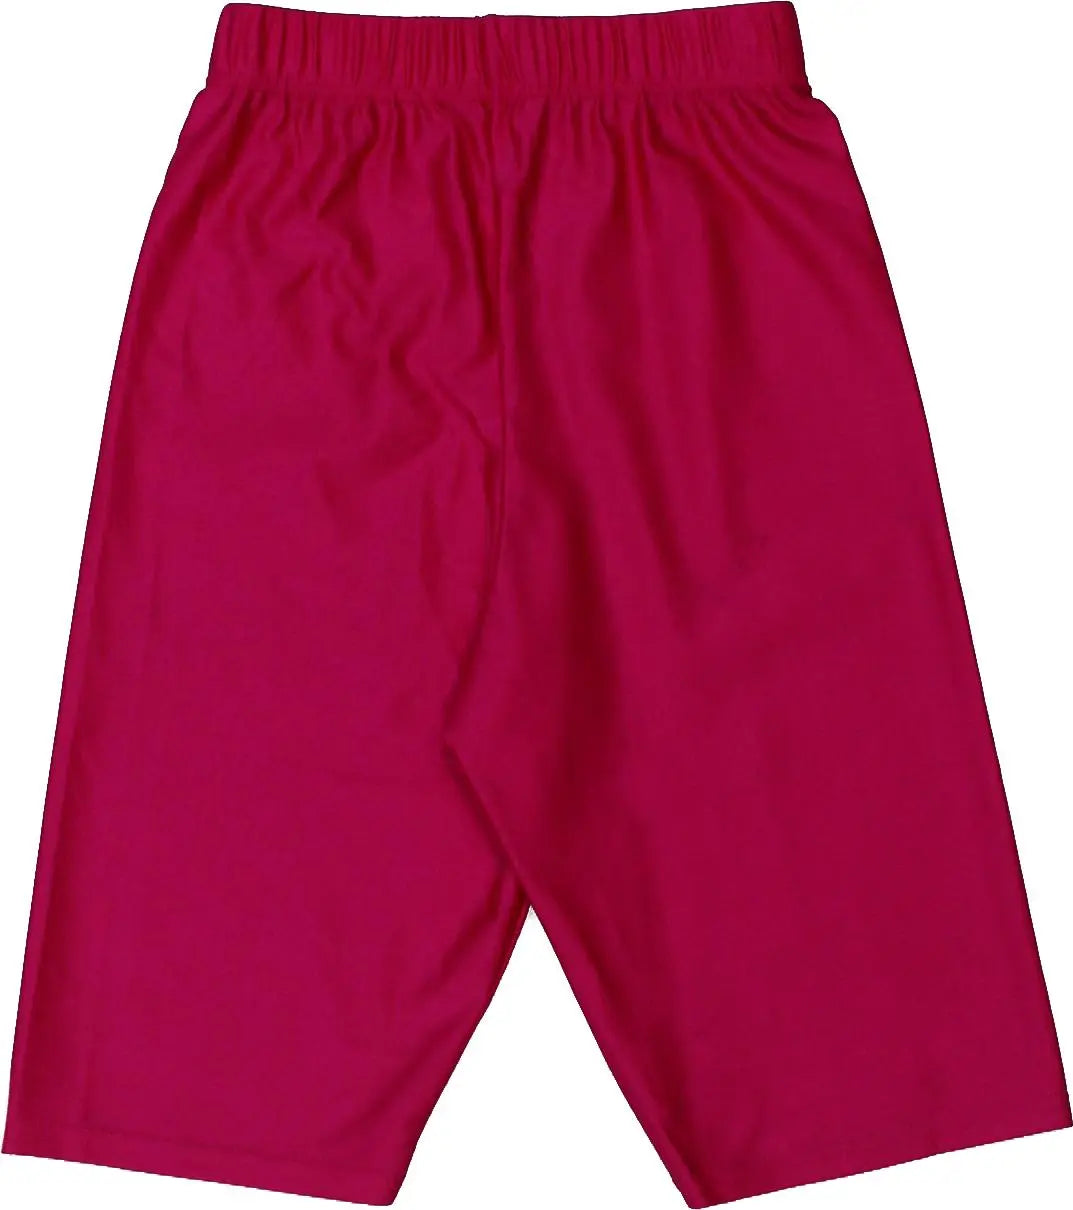 Confezioni - Pink Biker Shorts- ThriftTale.com - Vintage and second handclothing